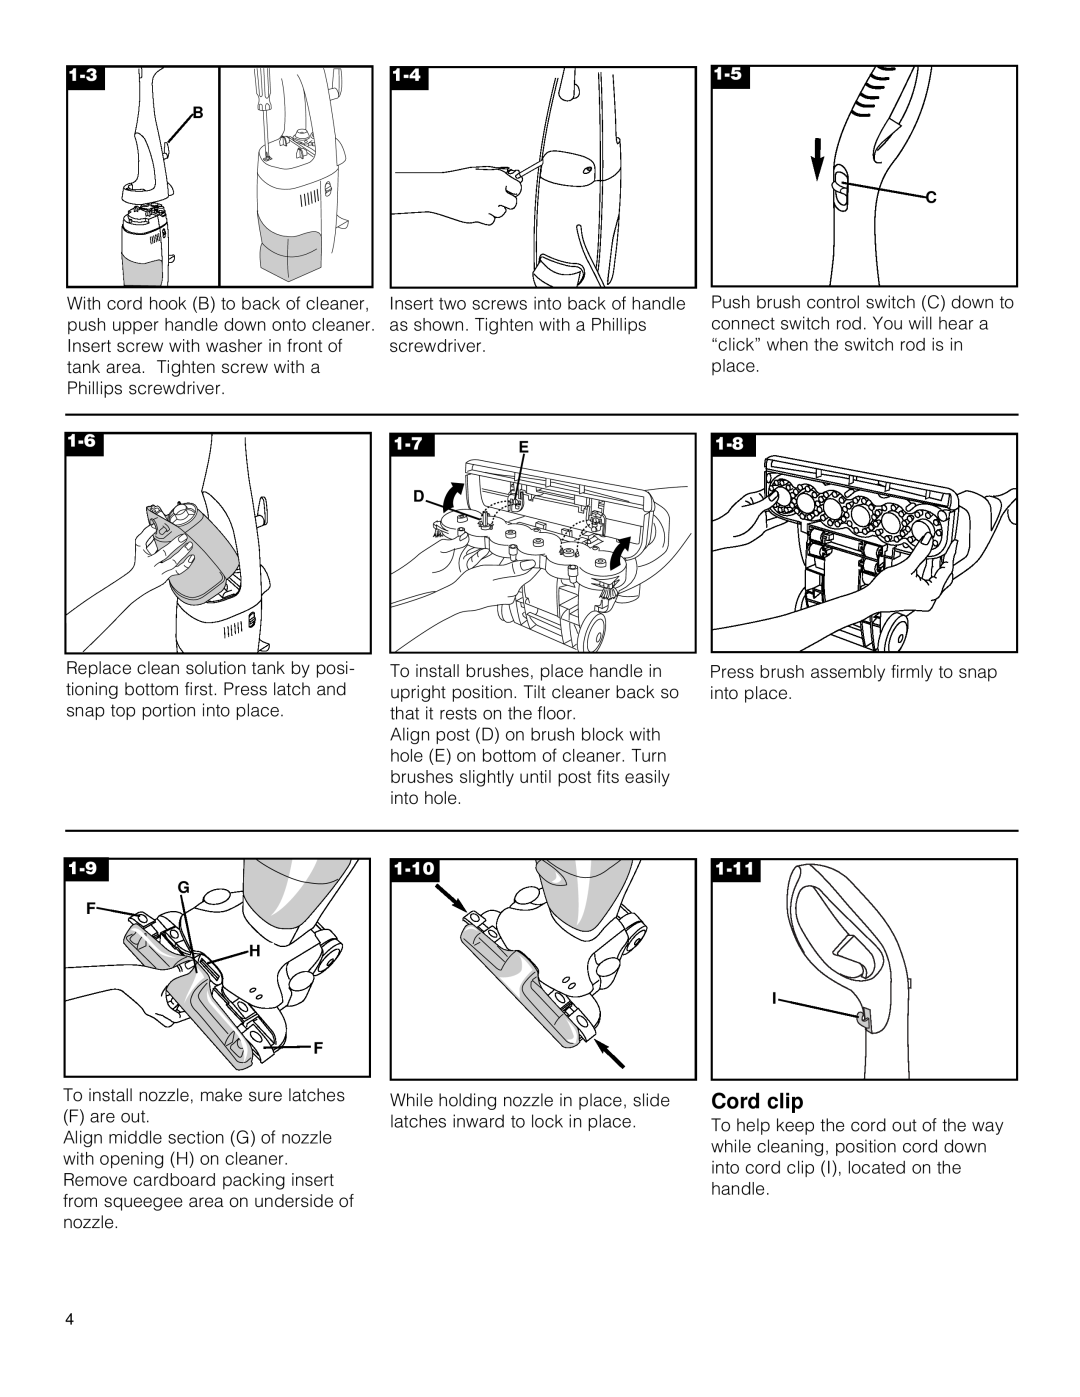 Hoover Hard Floor Cleaner owner manual Cord clip, 1-10, 1-11 